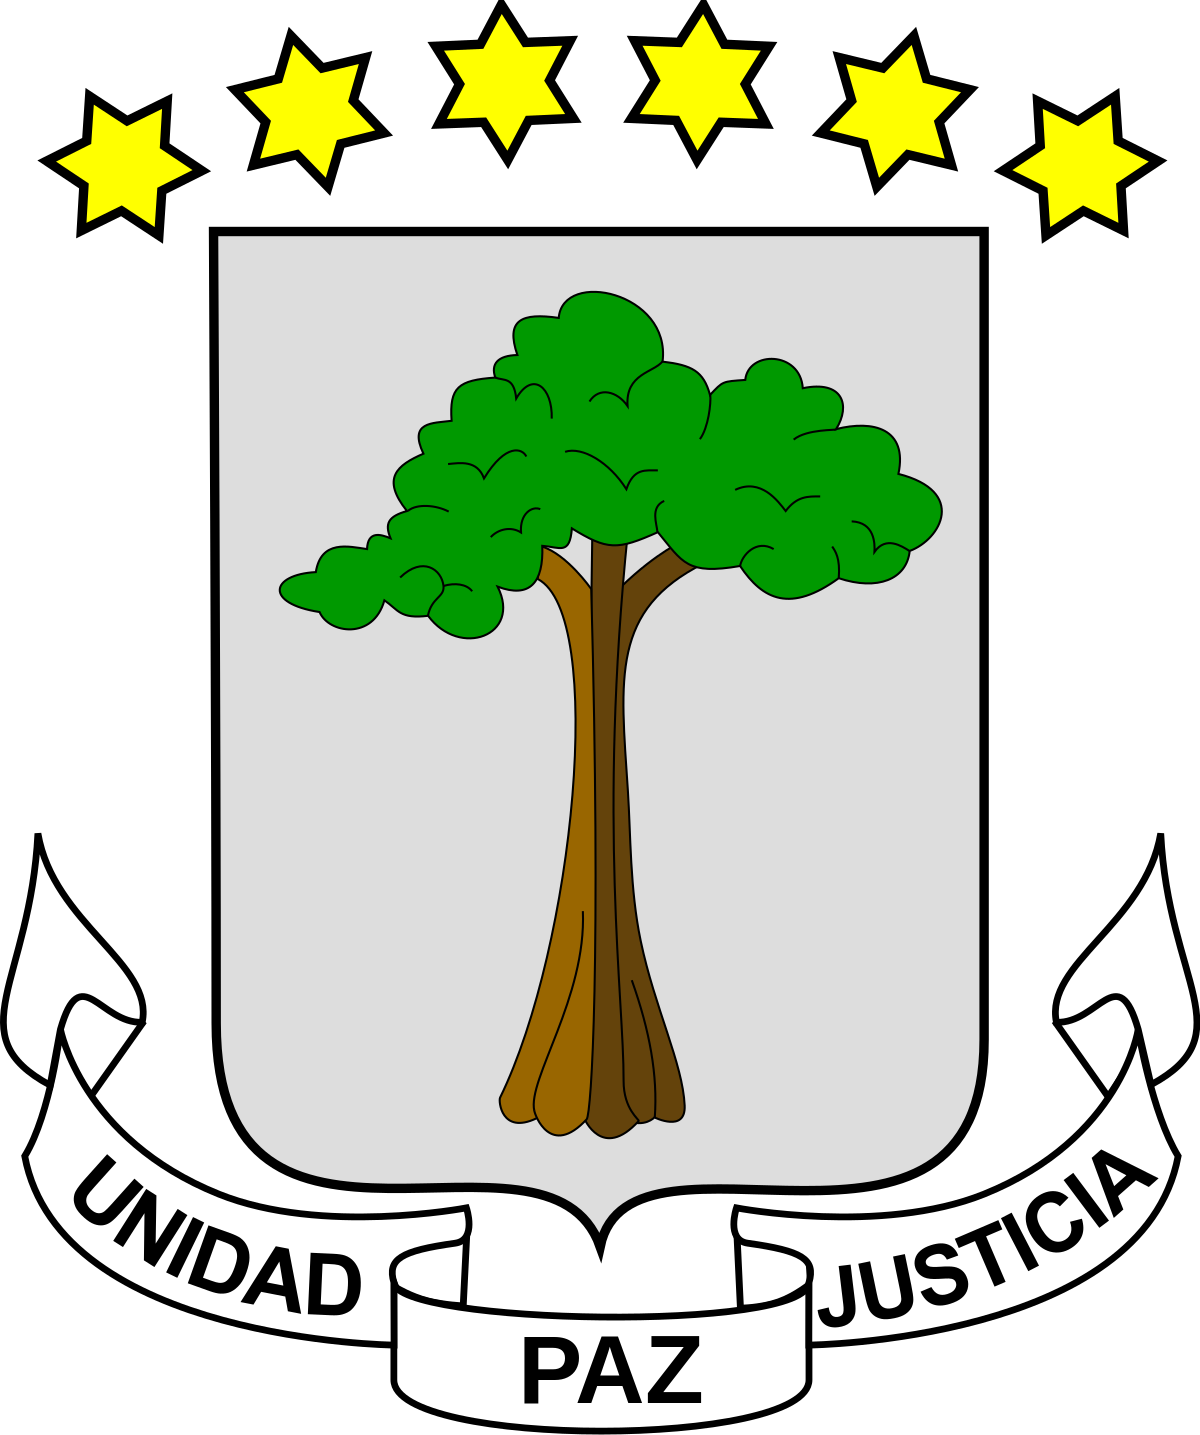 Coat Of Arms Of Equatorial Guinea - Wikipedia